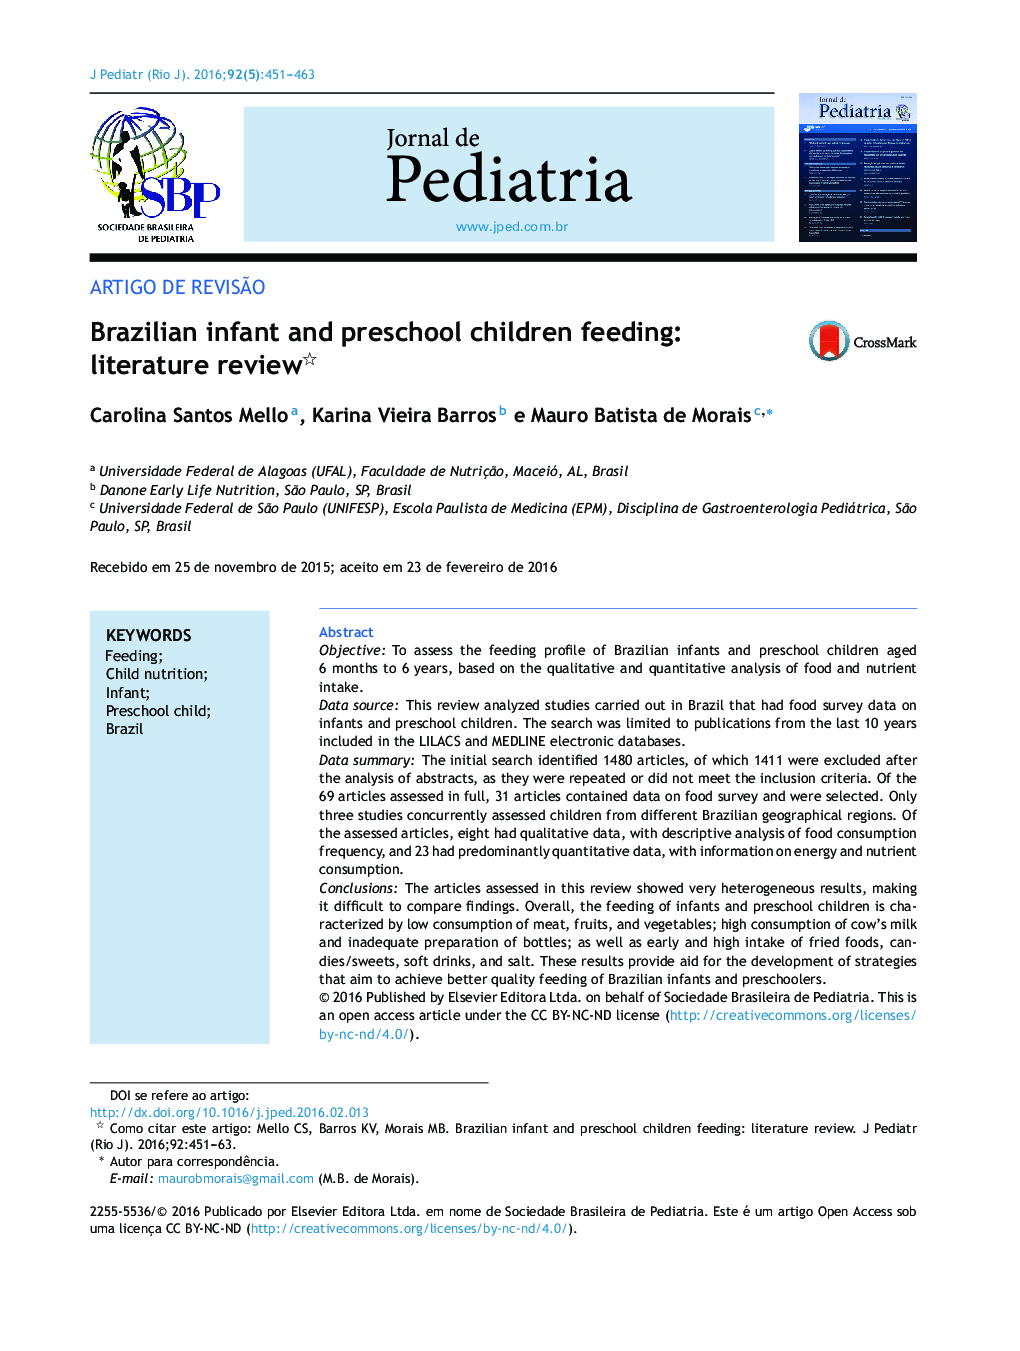 Brazilian infant and preschool children feeding: literature review 